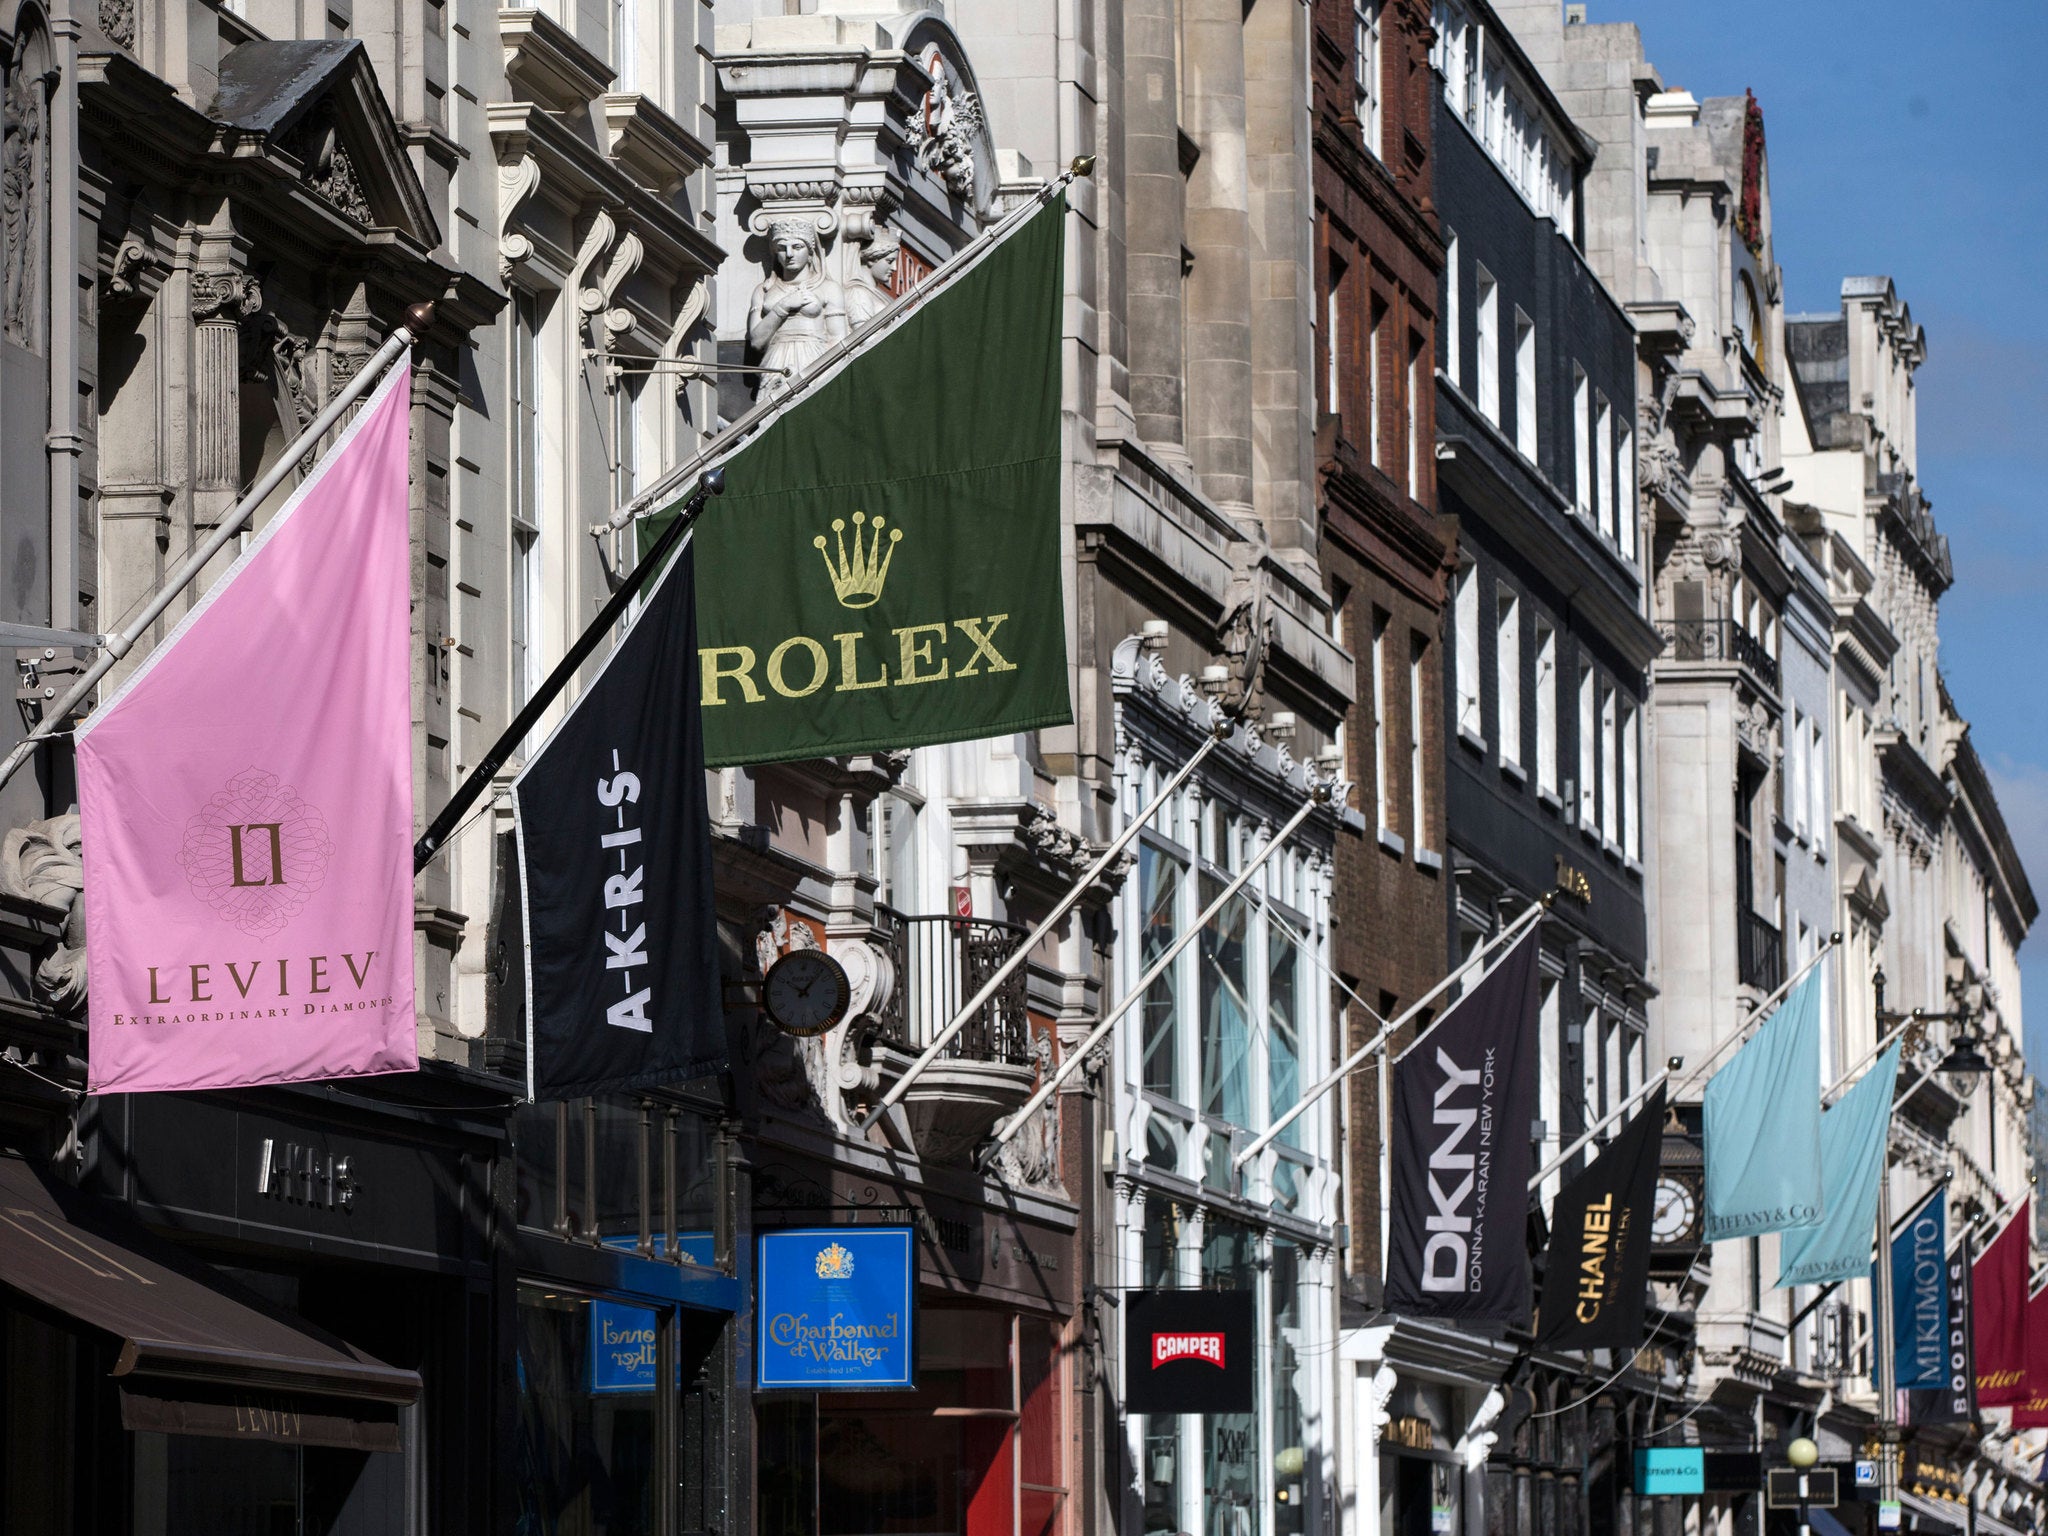 Luxury goods shops line Old Bond Street in Central London